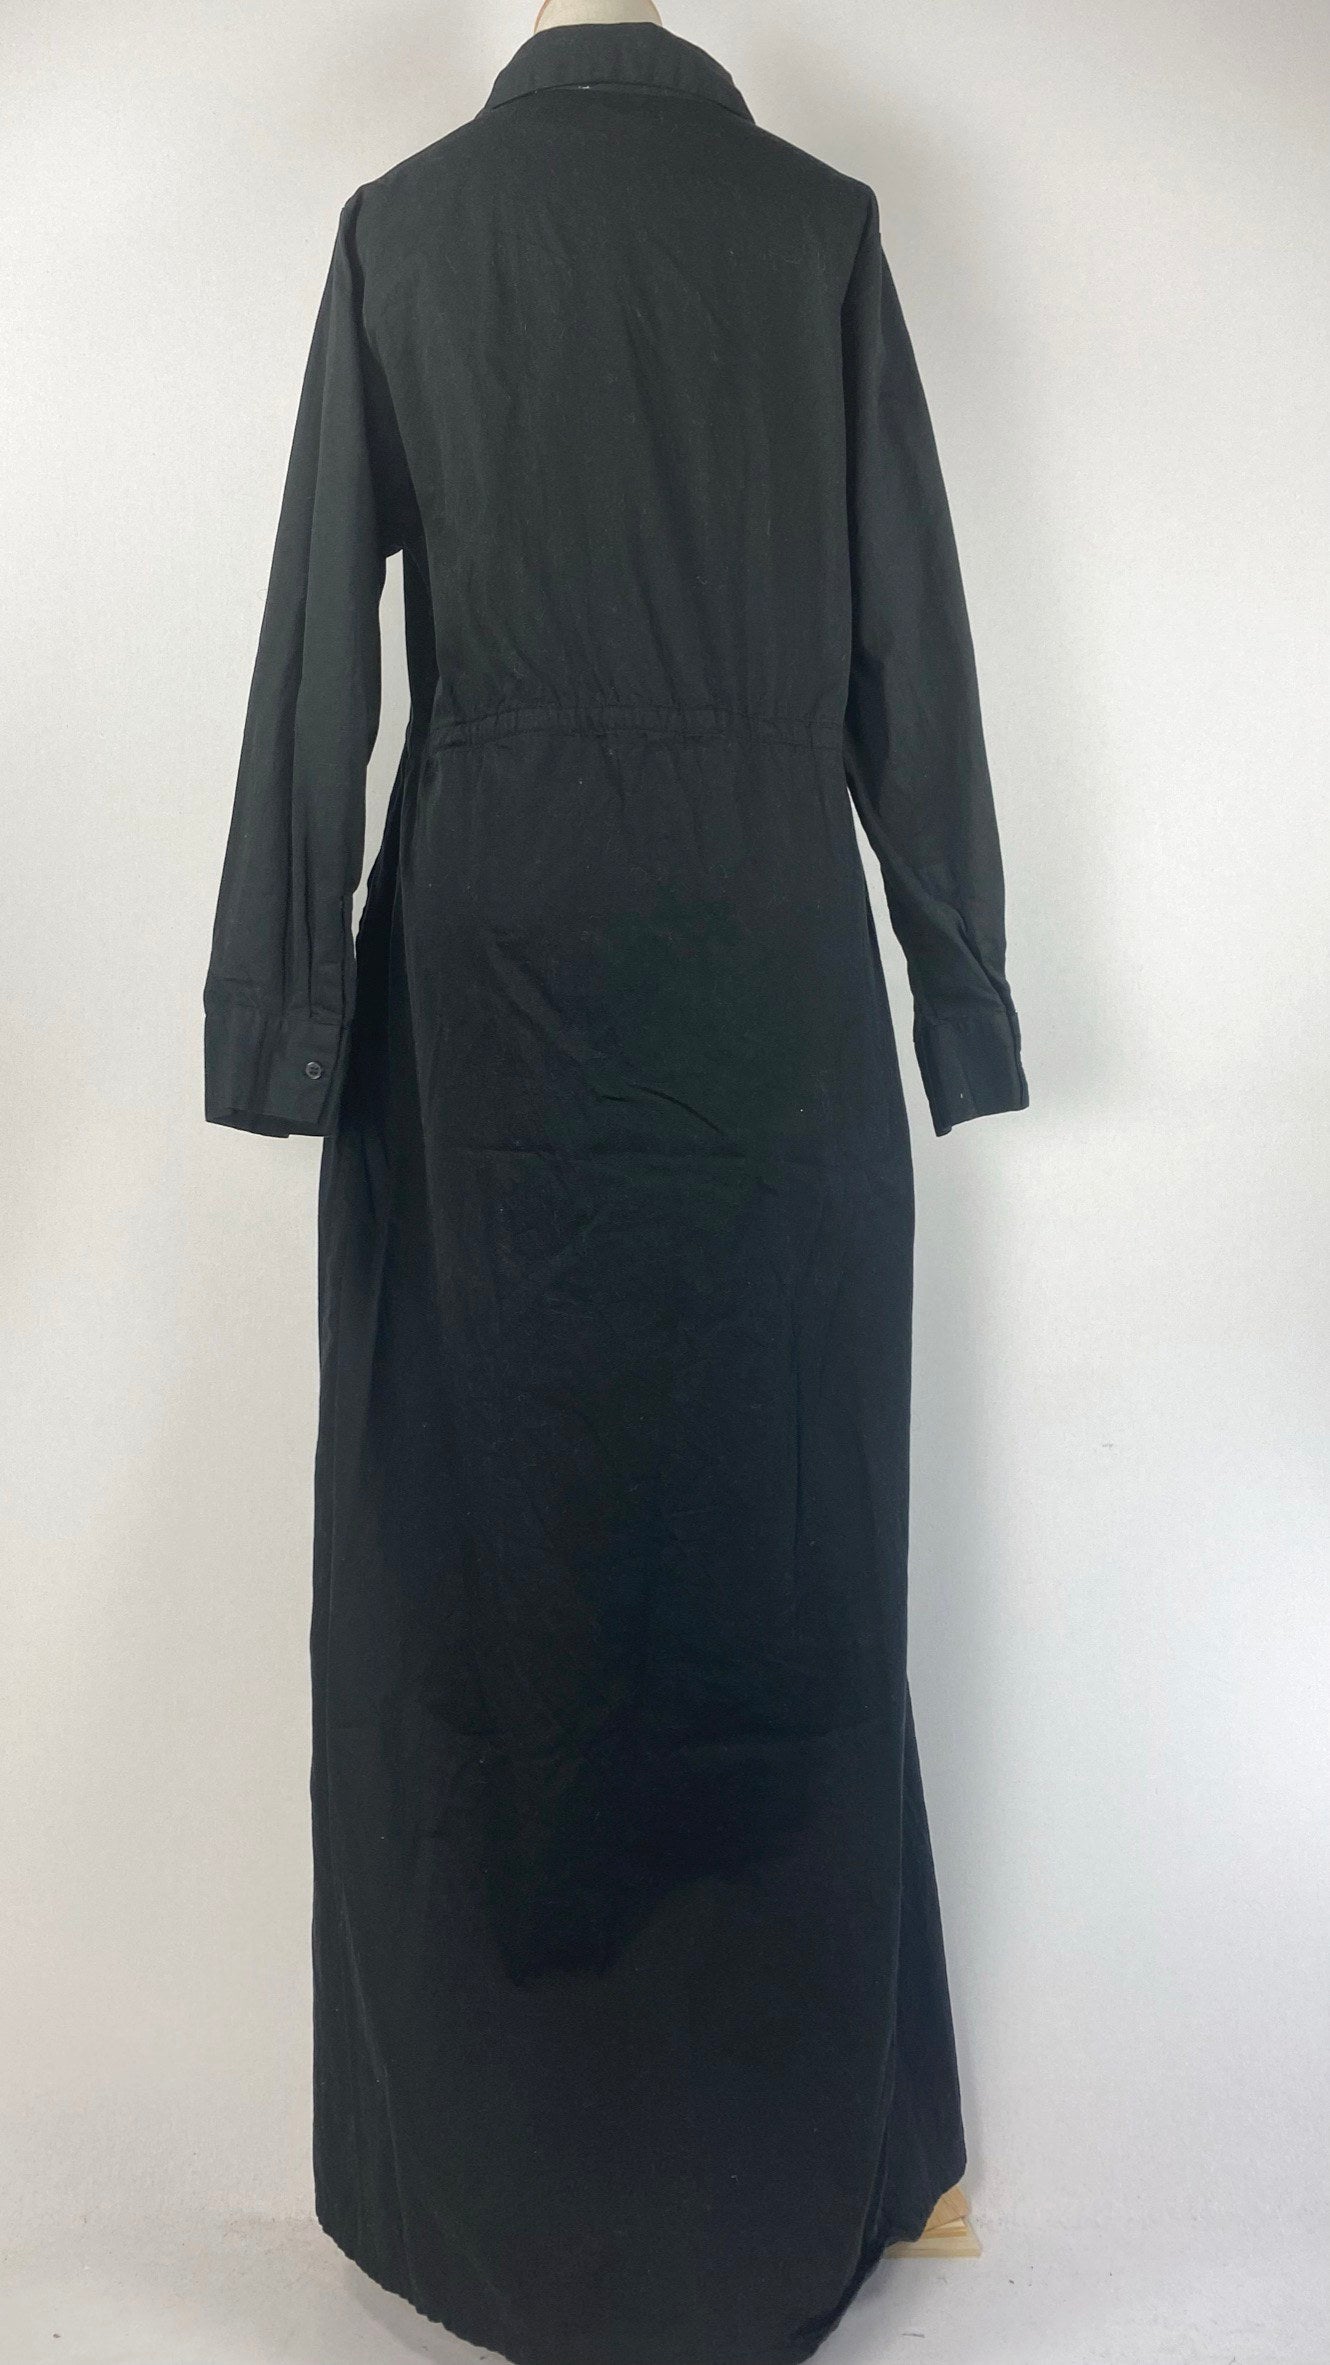 Long Sleeve Cinched Waist Maxi Dress, Black